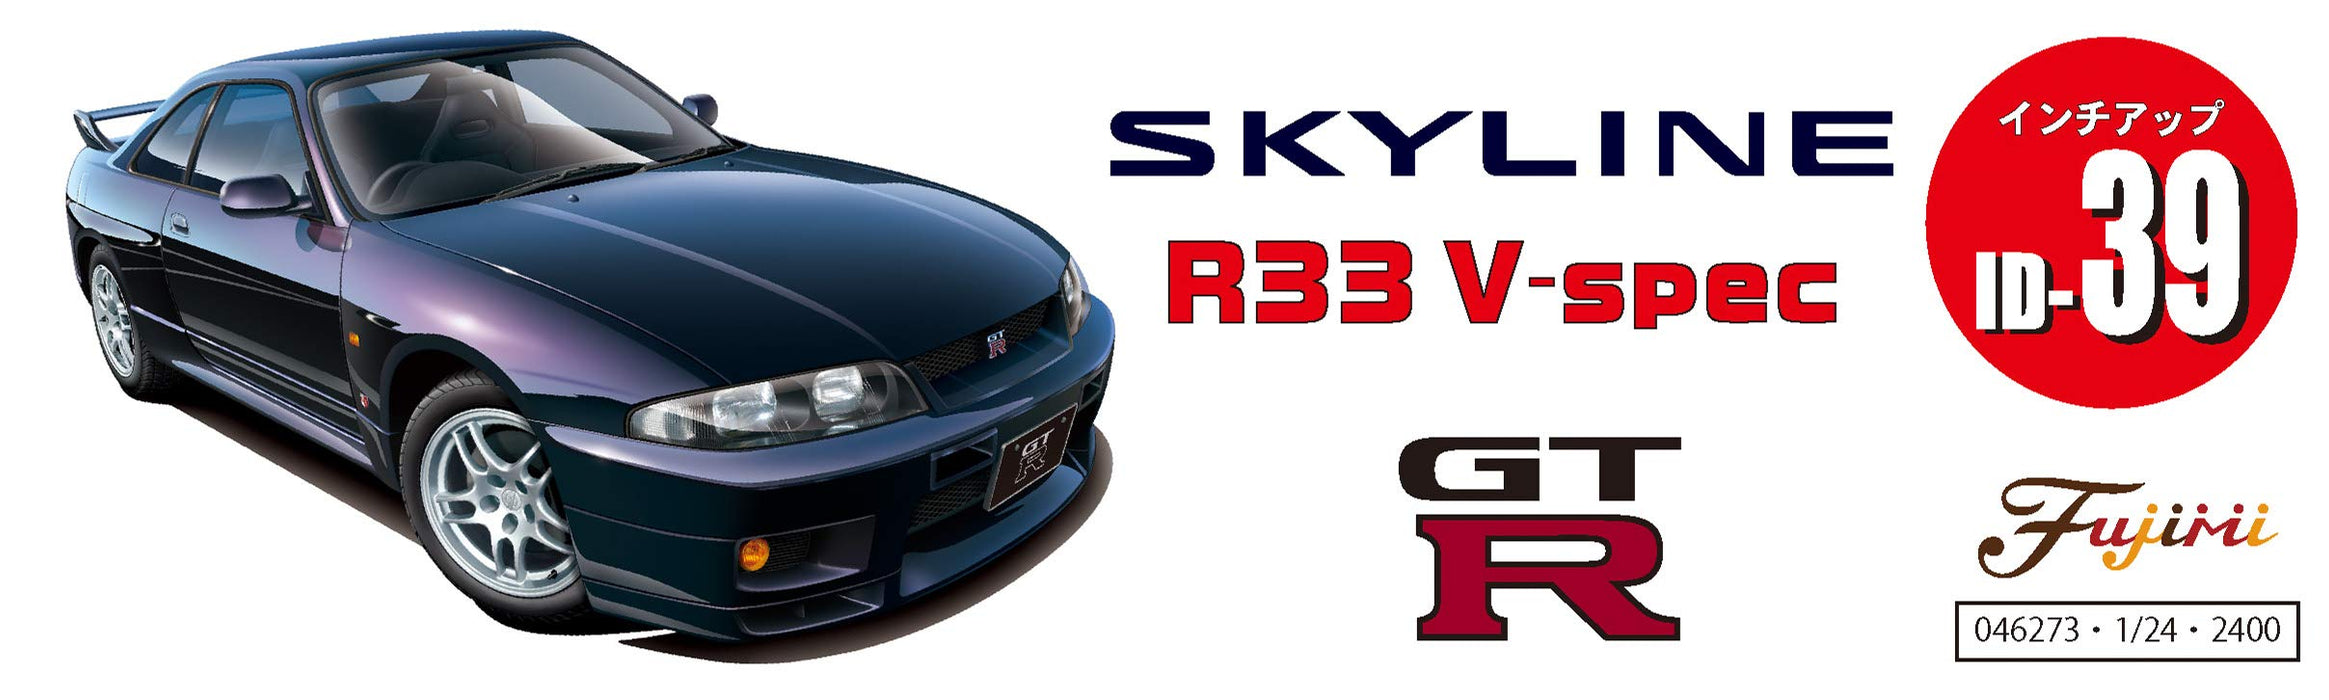 Fujimi Inch Up 1/24 R33 Skyline Gt-R V-Spec 95 Japanischer Automodellbausatz